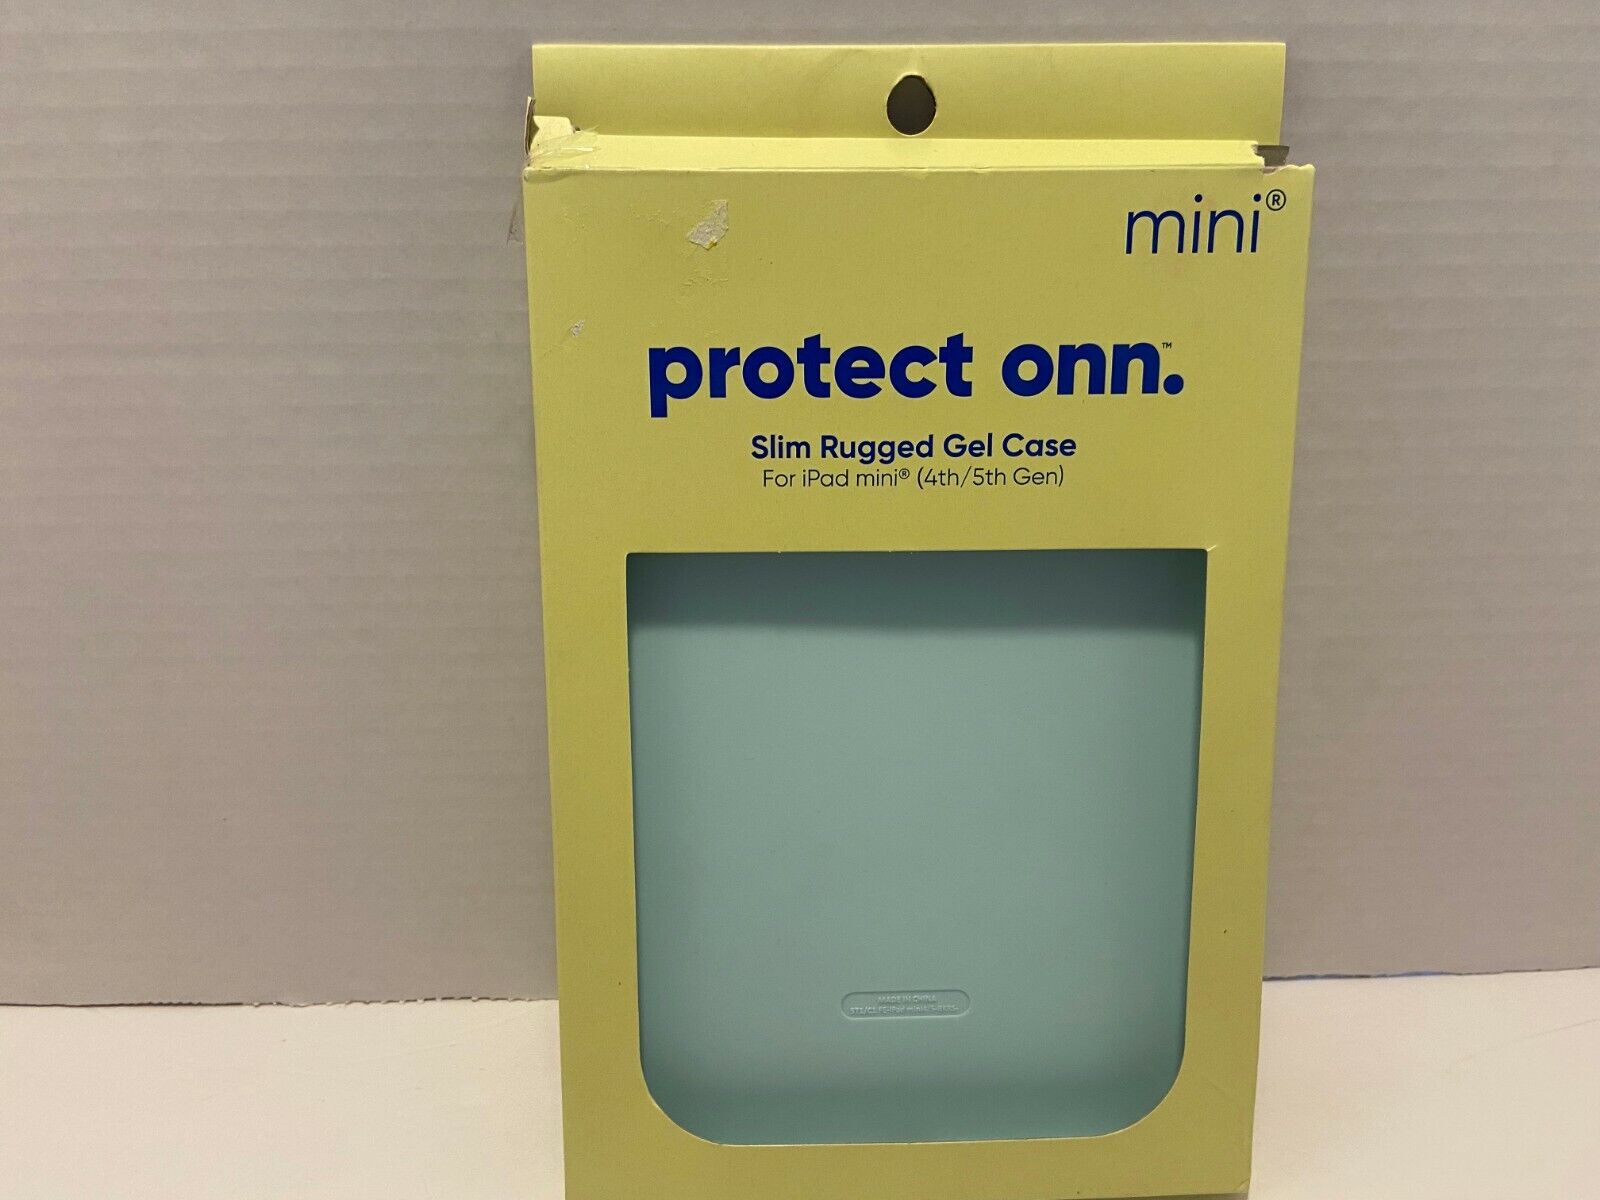 Protect onn. | Slim Rugged Gel Case for iPad mini | Light blue NEW IN BOX